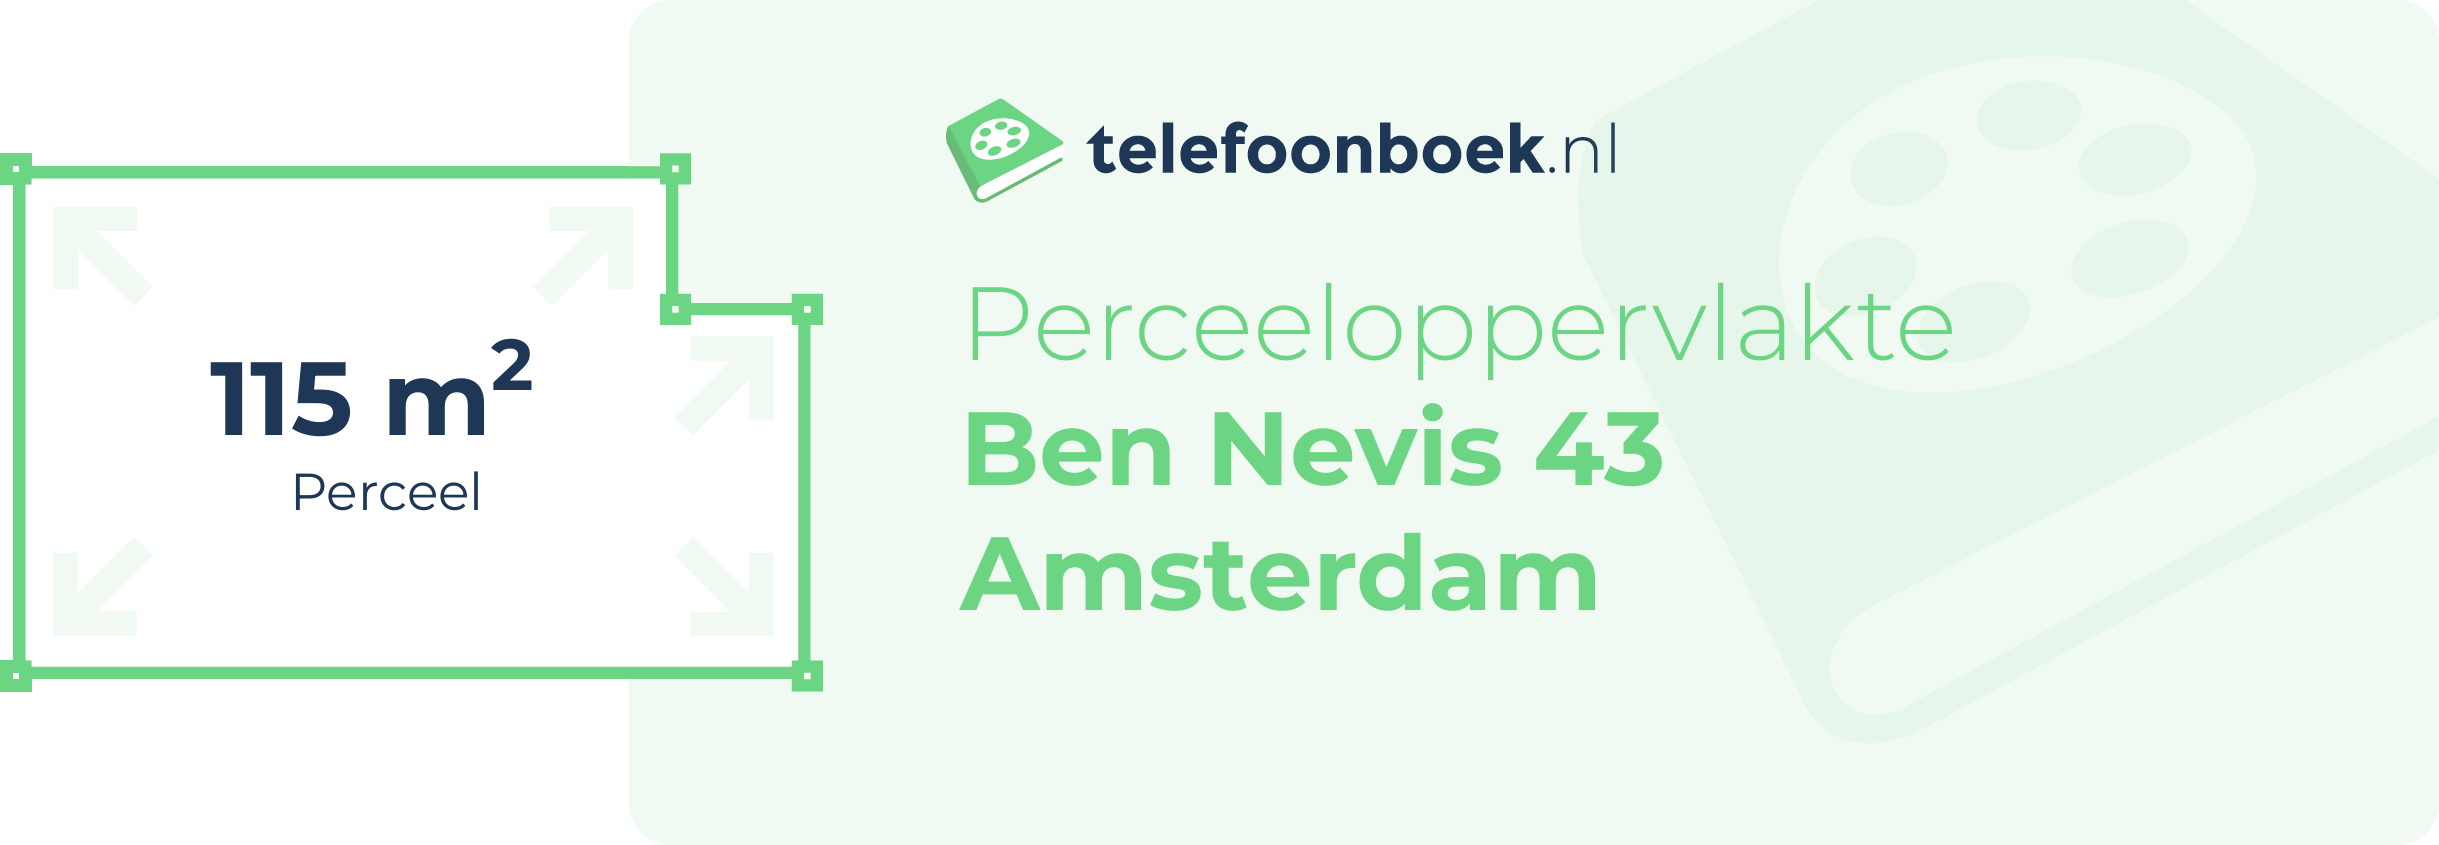 Perceeloppervlakte Ben Nevis 43 Amsterdam